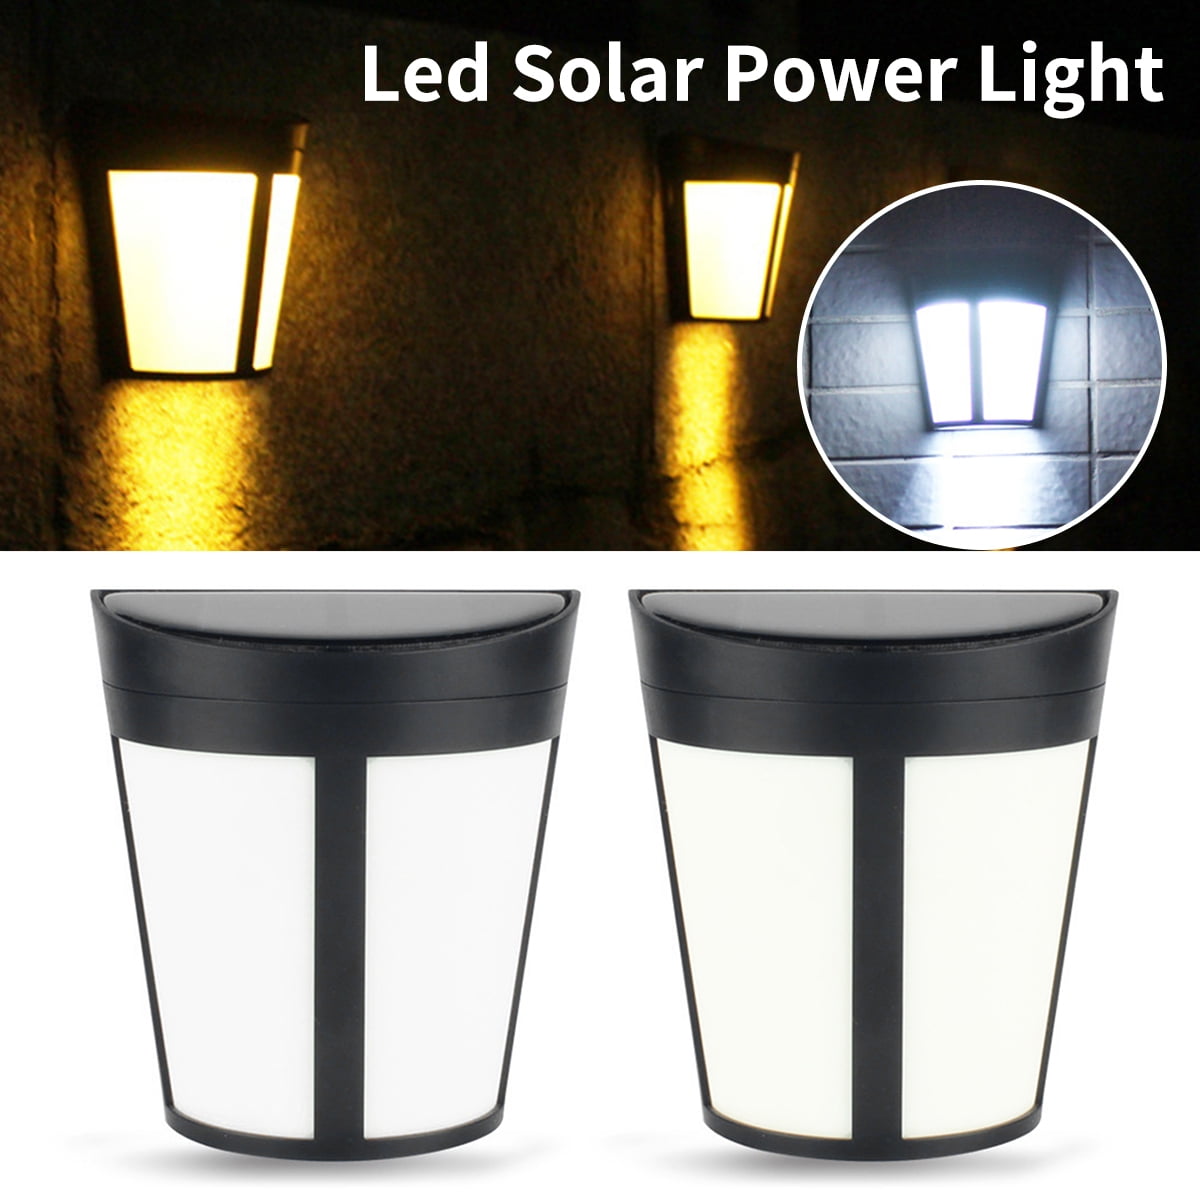 Details about   2 STEEL SOLAR POWERED LED WALL LIGHT FENCE LAMP OUTDOOR GARDEN LI #K